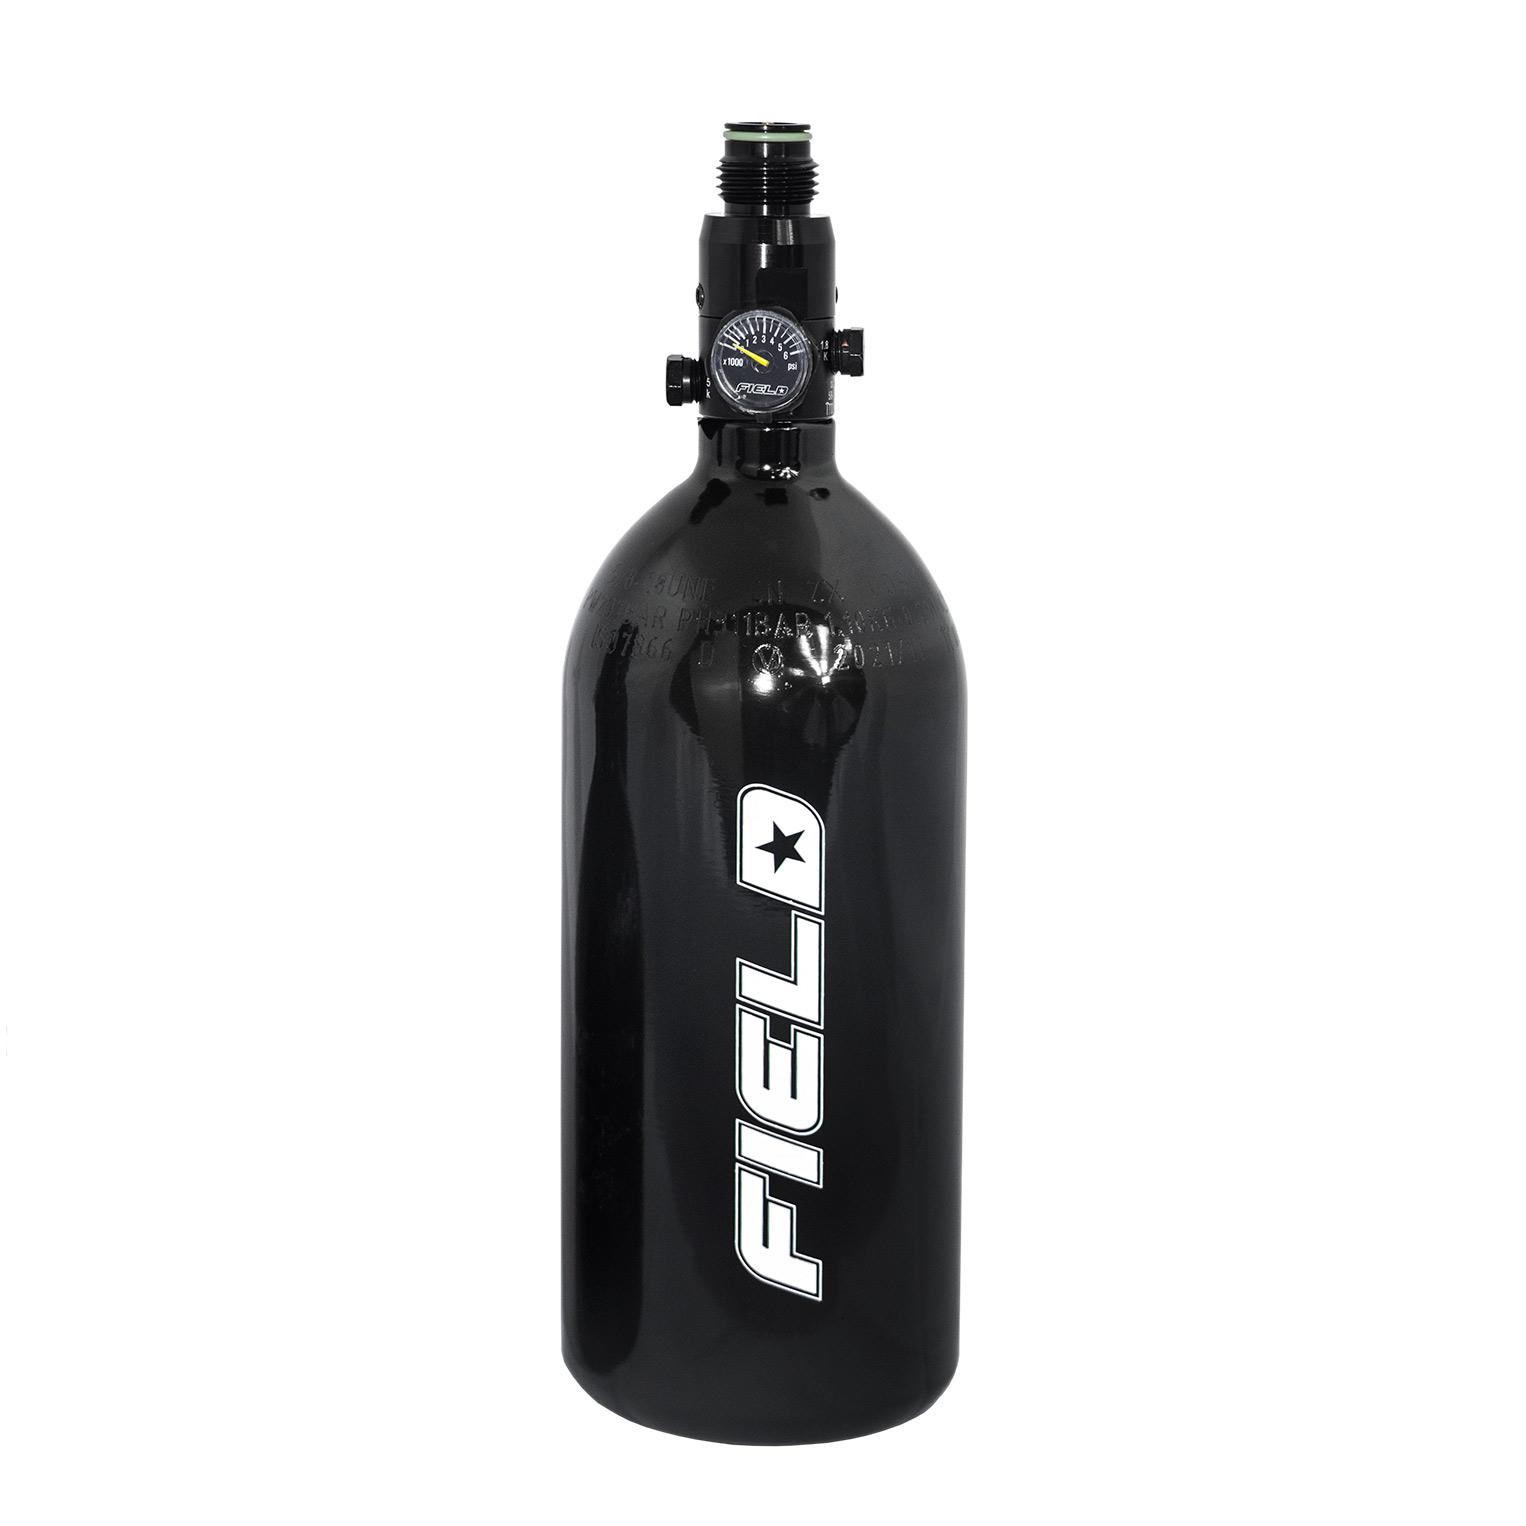 Field Botella 0.8L - 48ci c/Regulador 3K Psi V3